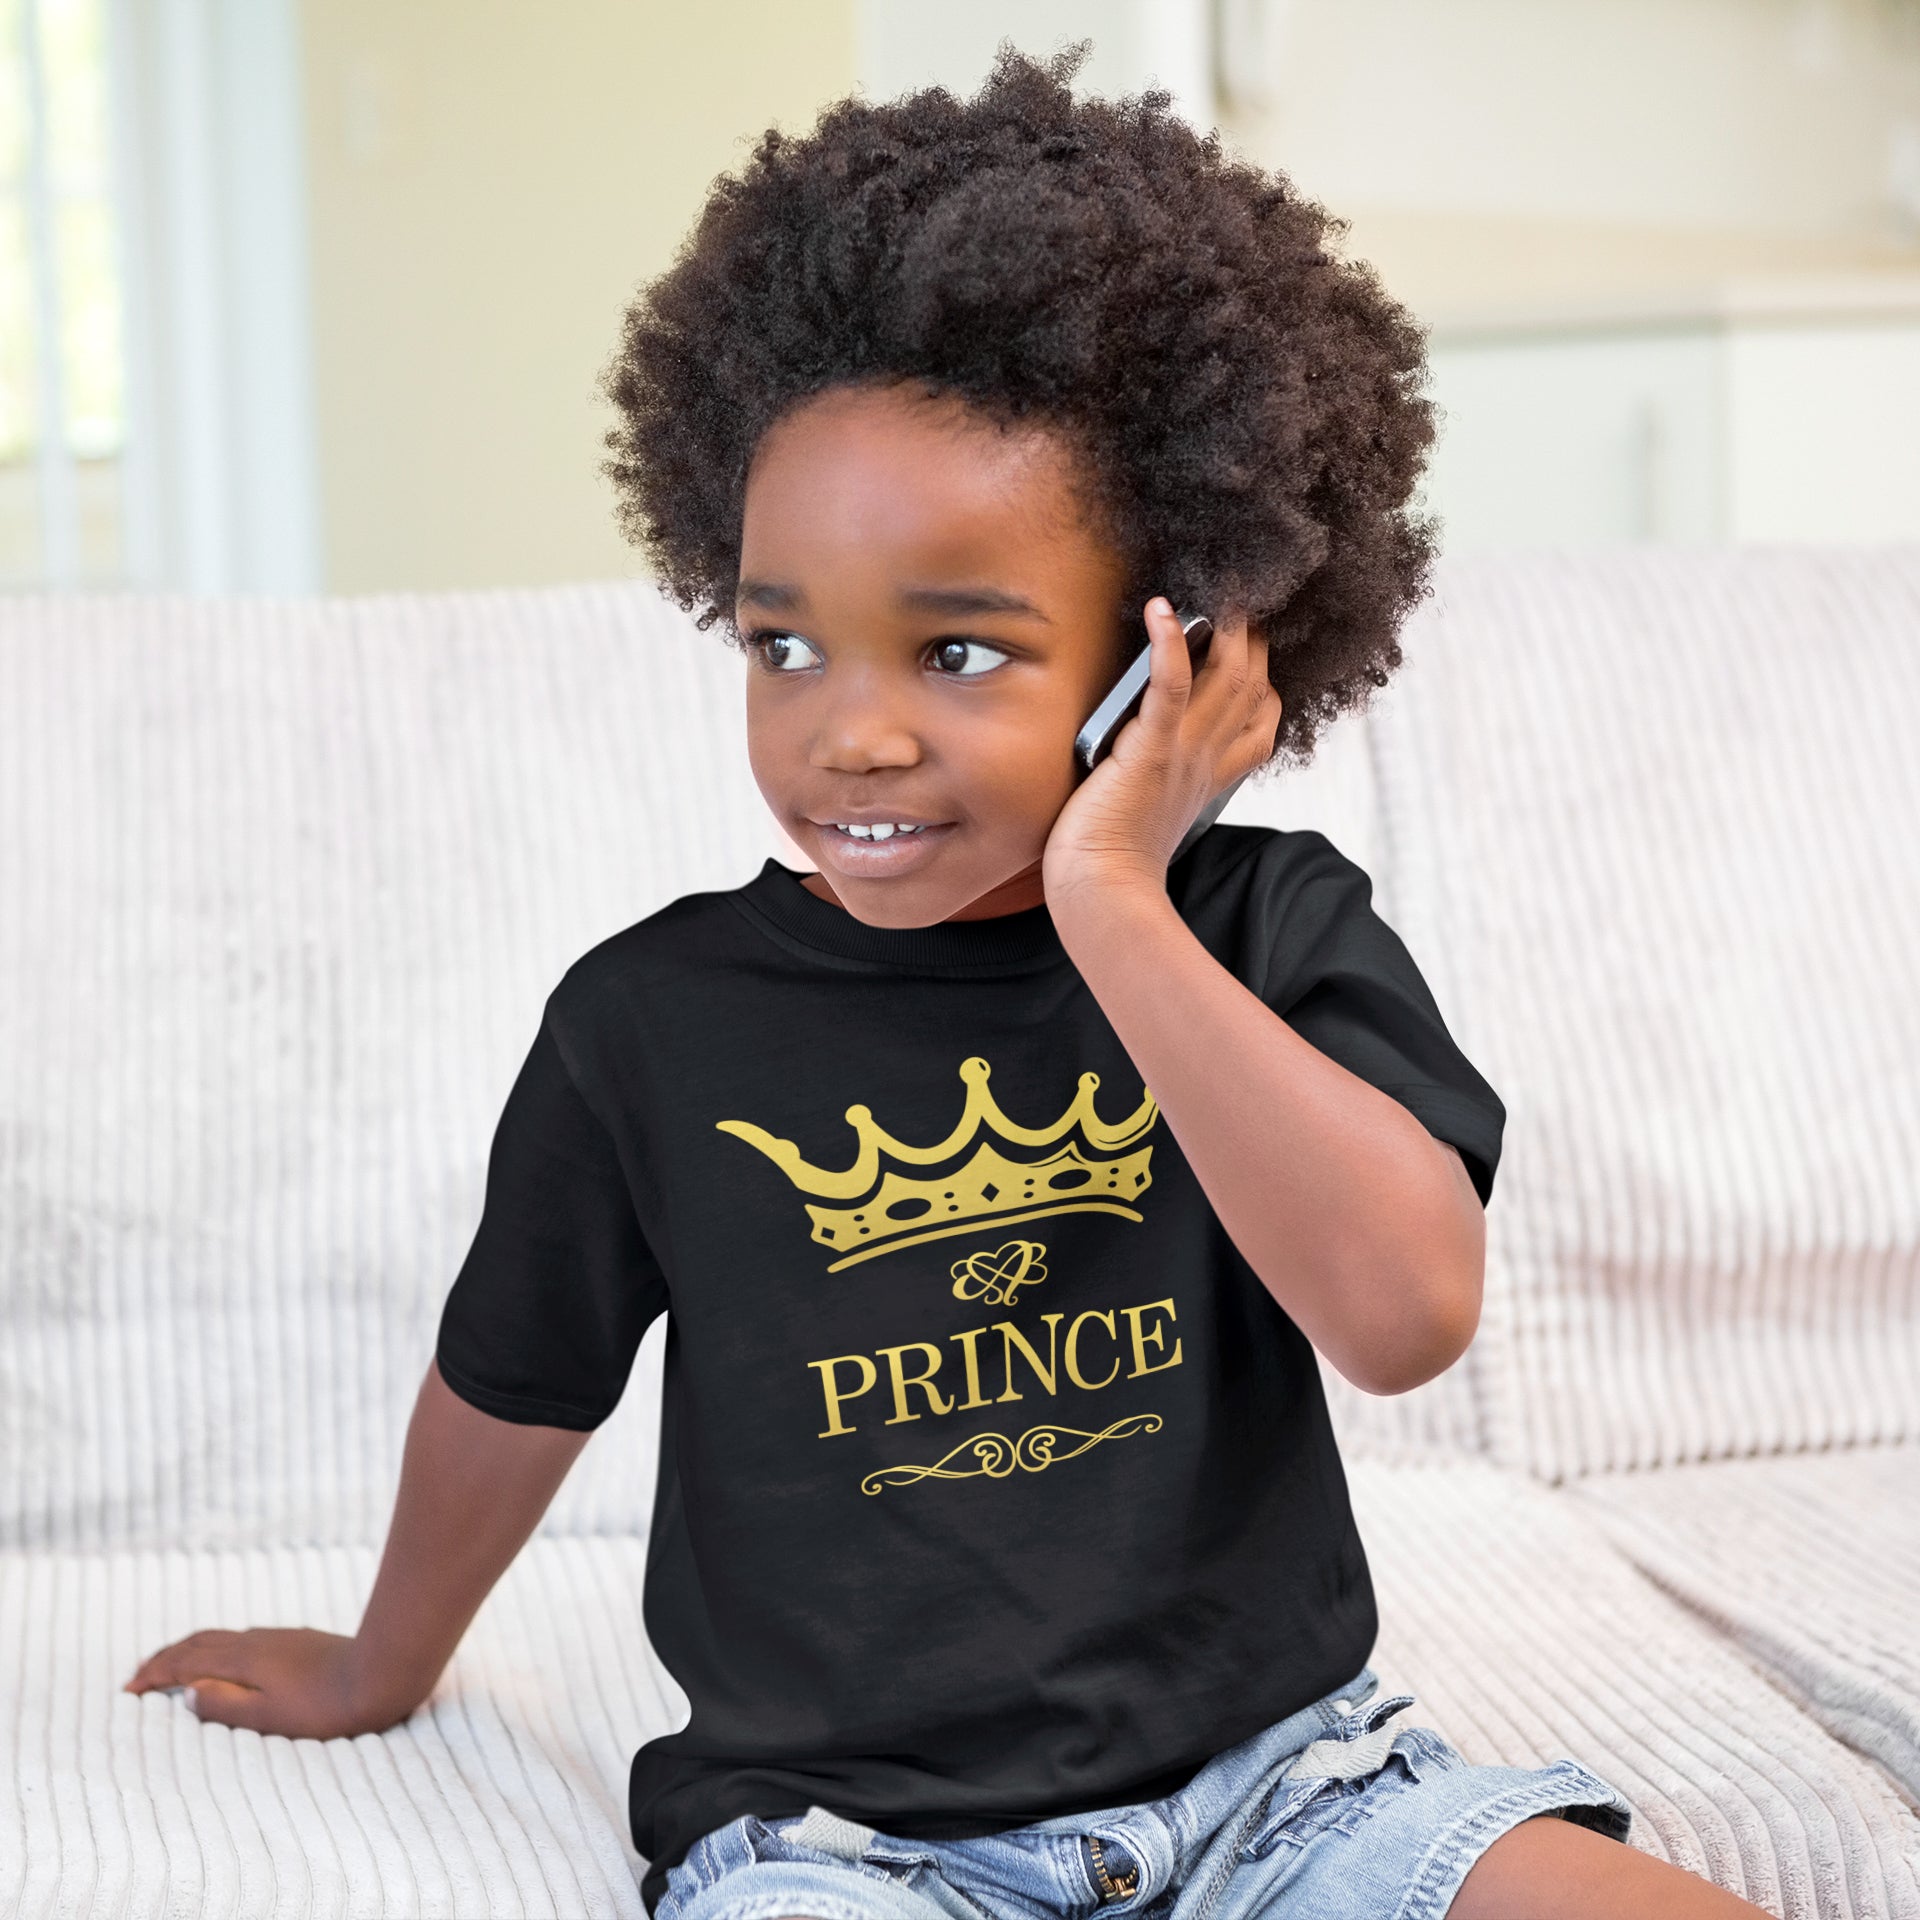 Camiseta de Niño Príncipe